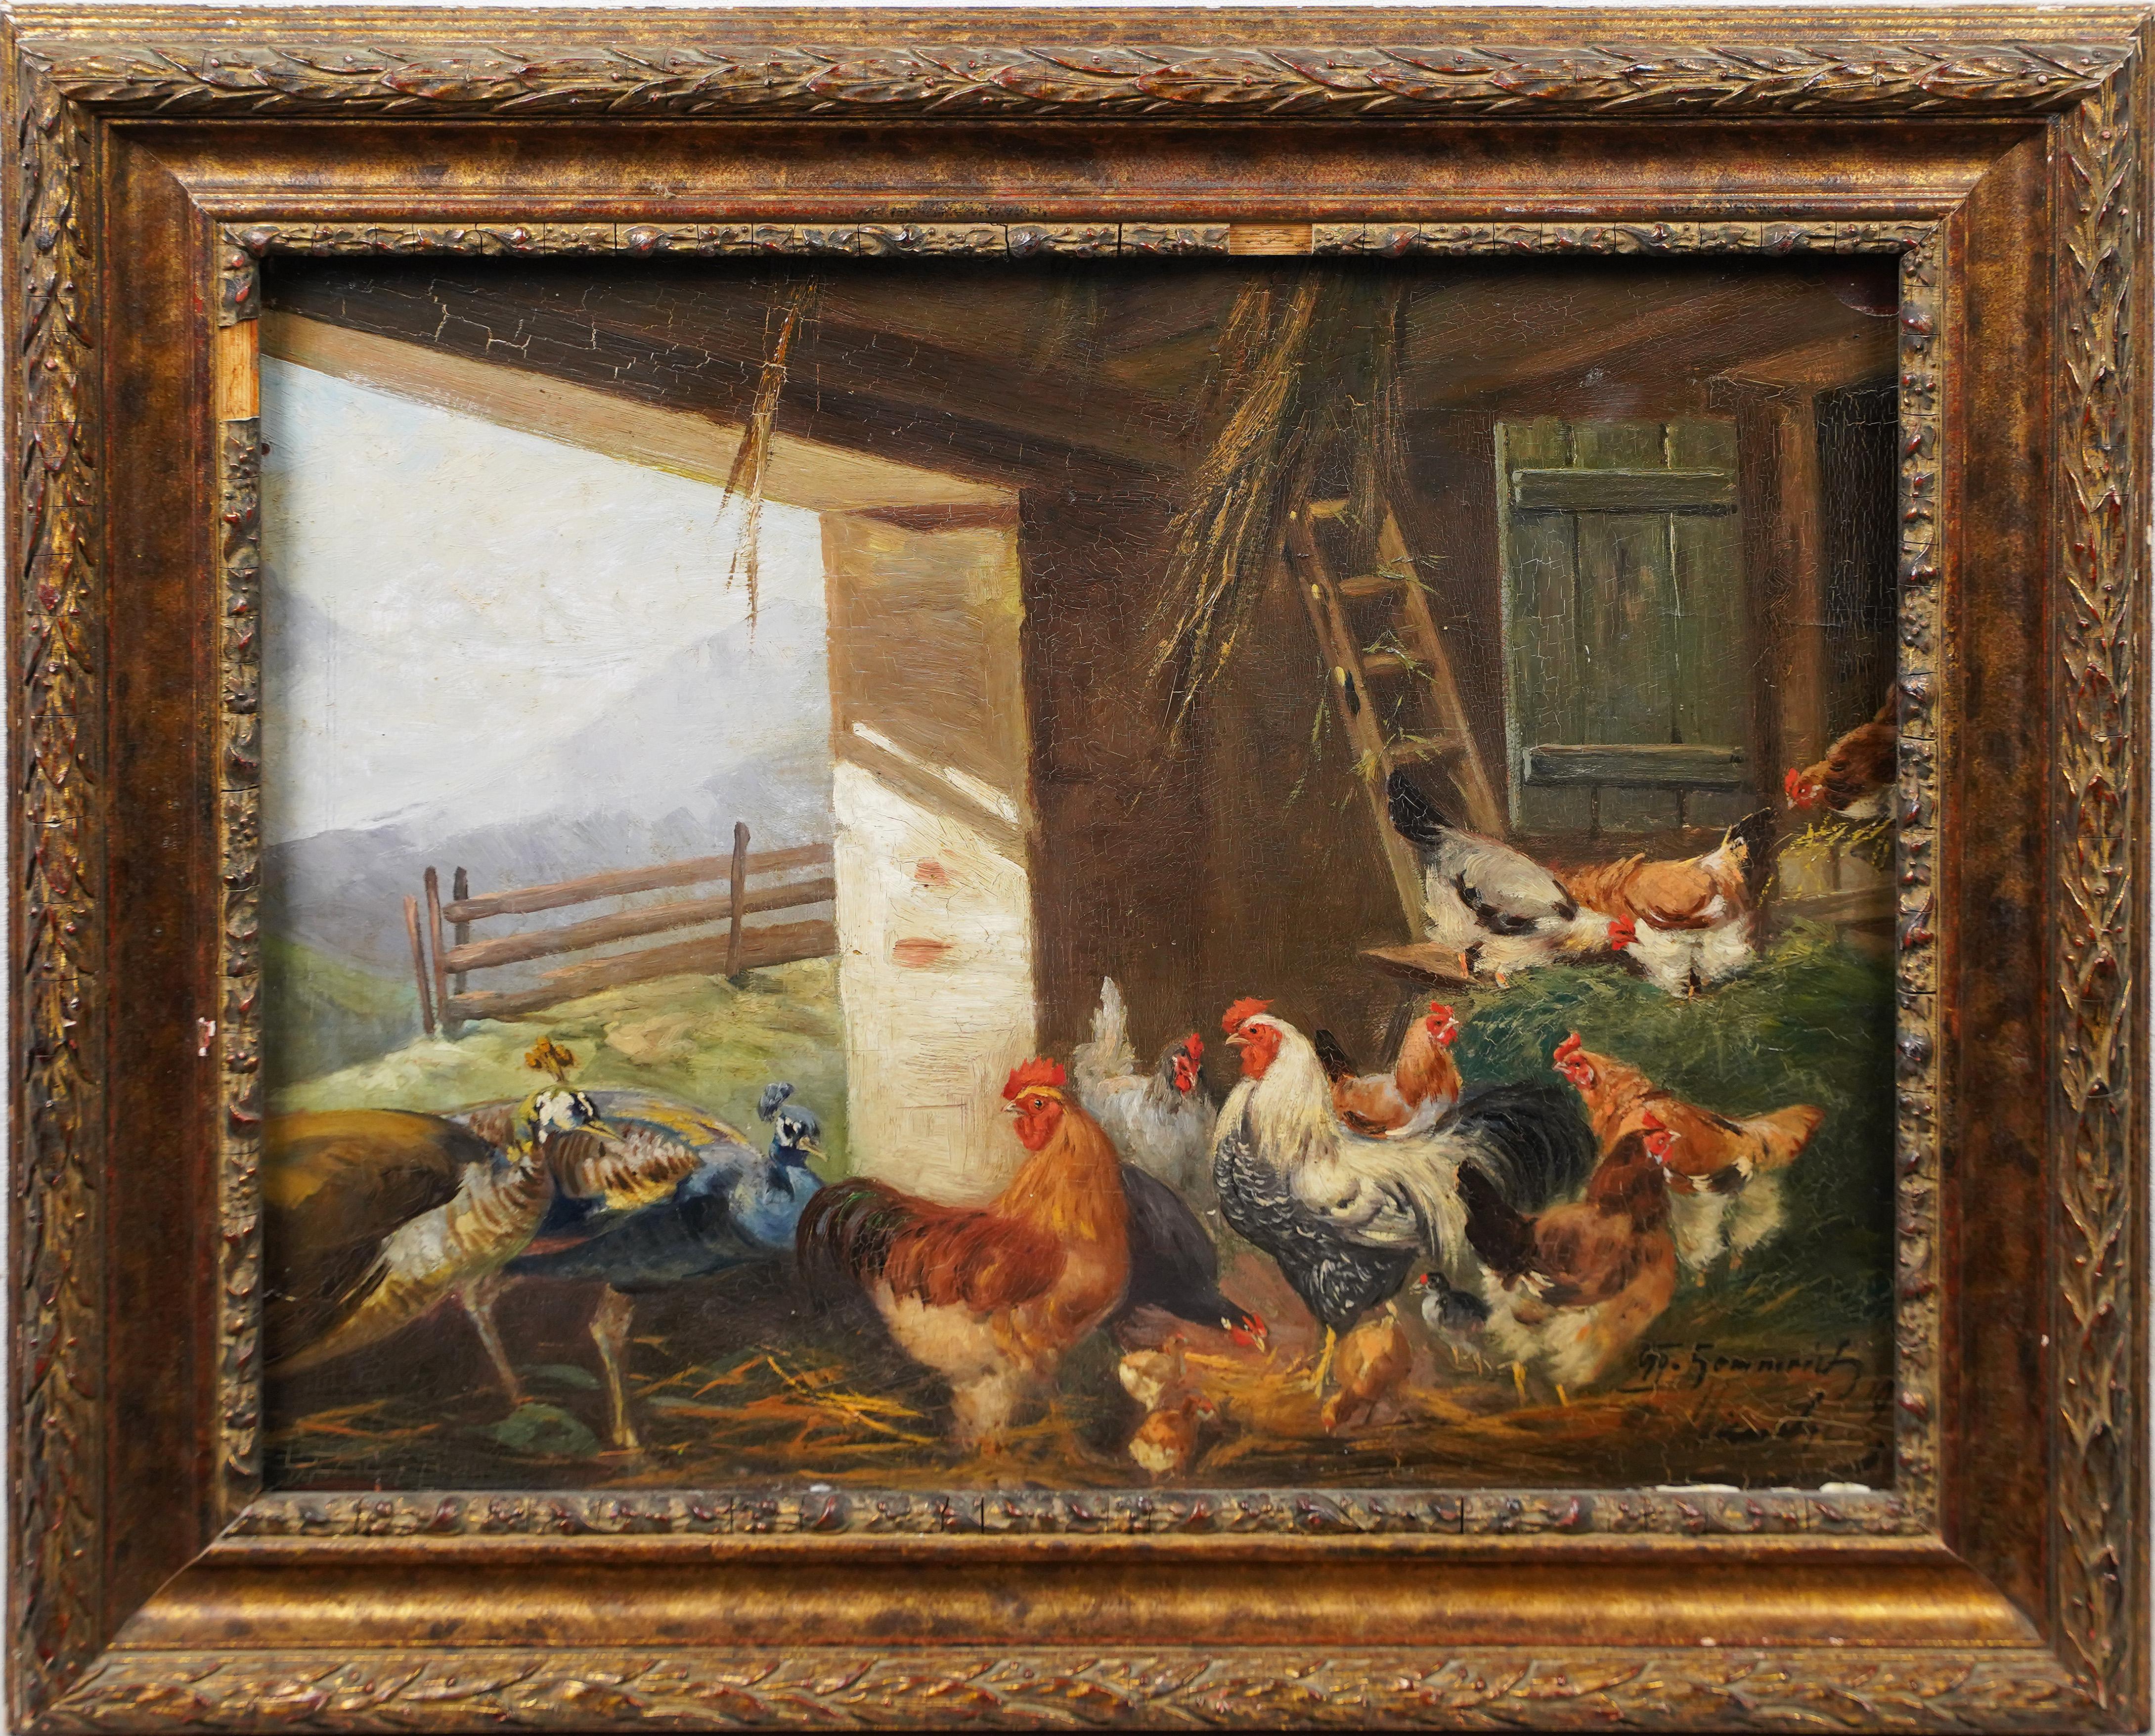 Antique European signed impressionist barnyard oil painting.  Oil on board.  Signed.  Framed.  Image size, 20L x 16H.